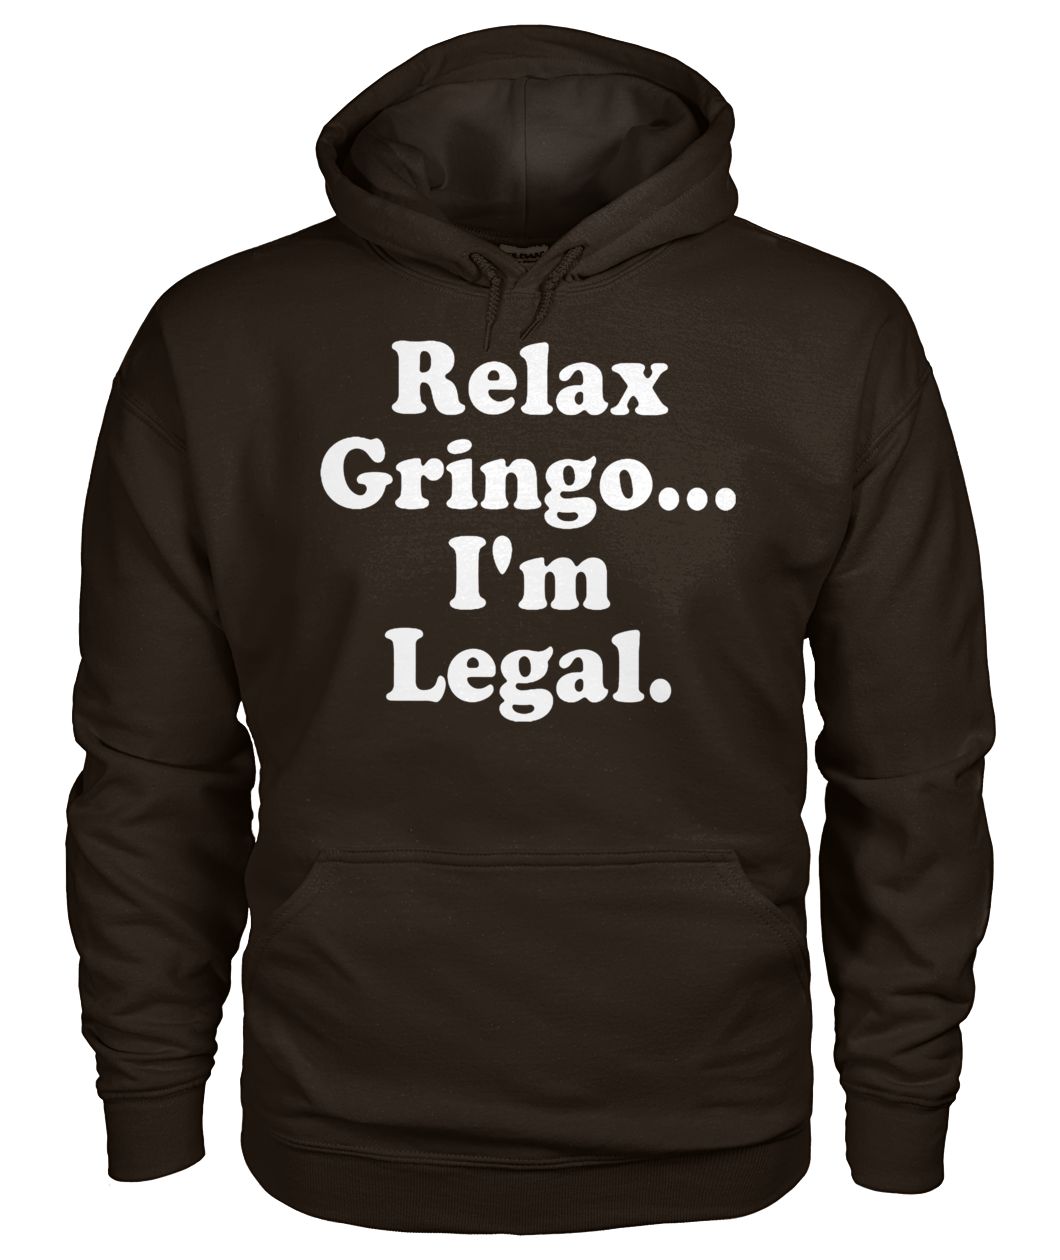 Relax gringo I'm legal gildan hoodie